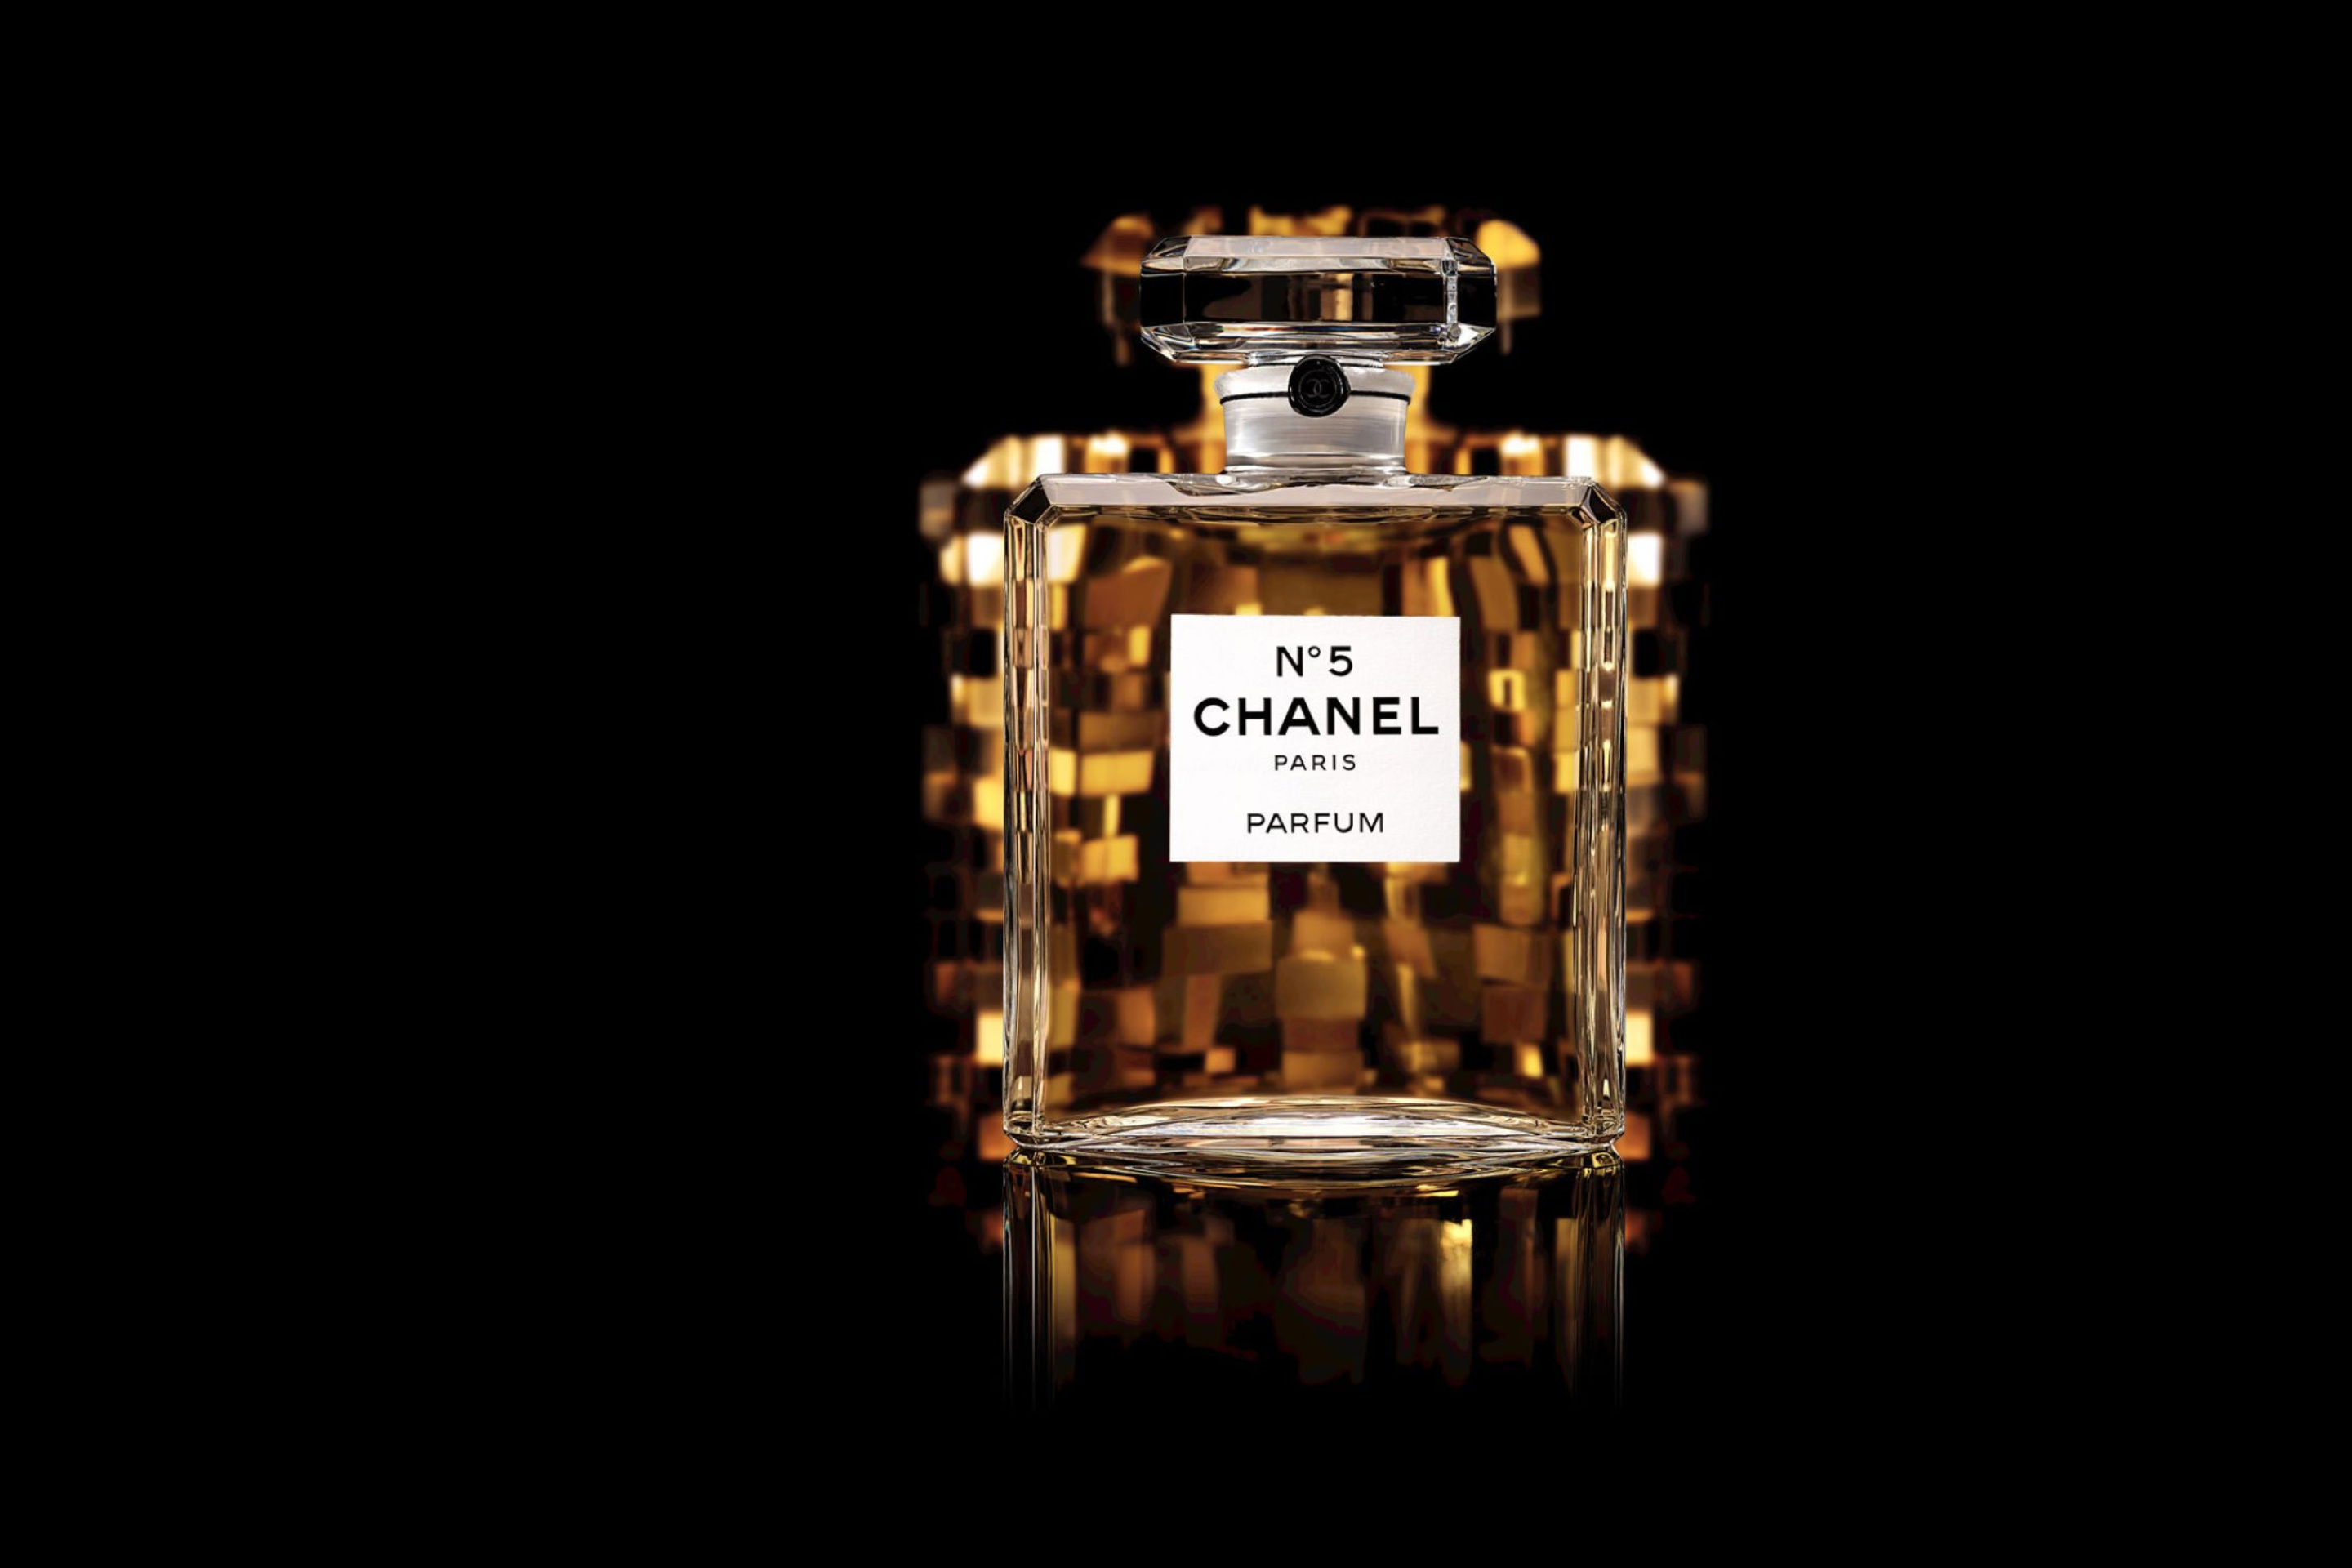 Chanel 5 Fragrance Perfume wallpaper 2880x1920